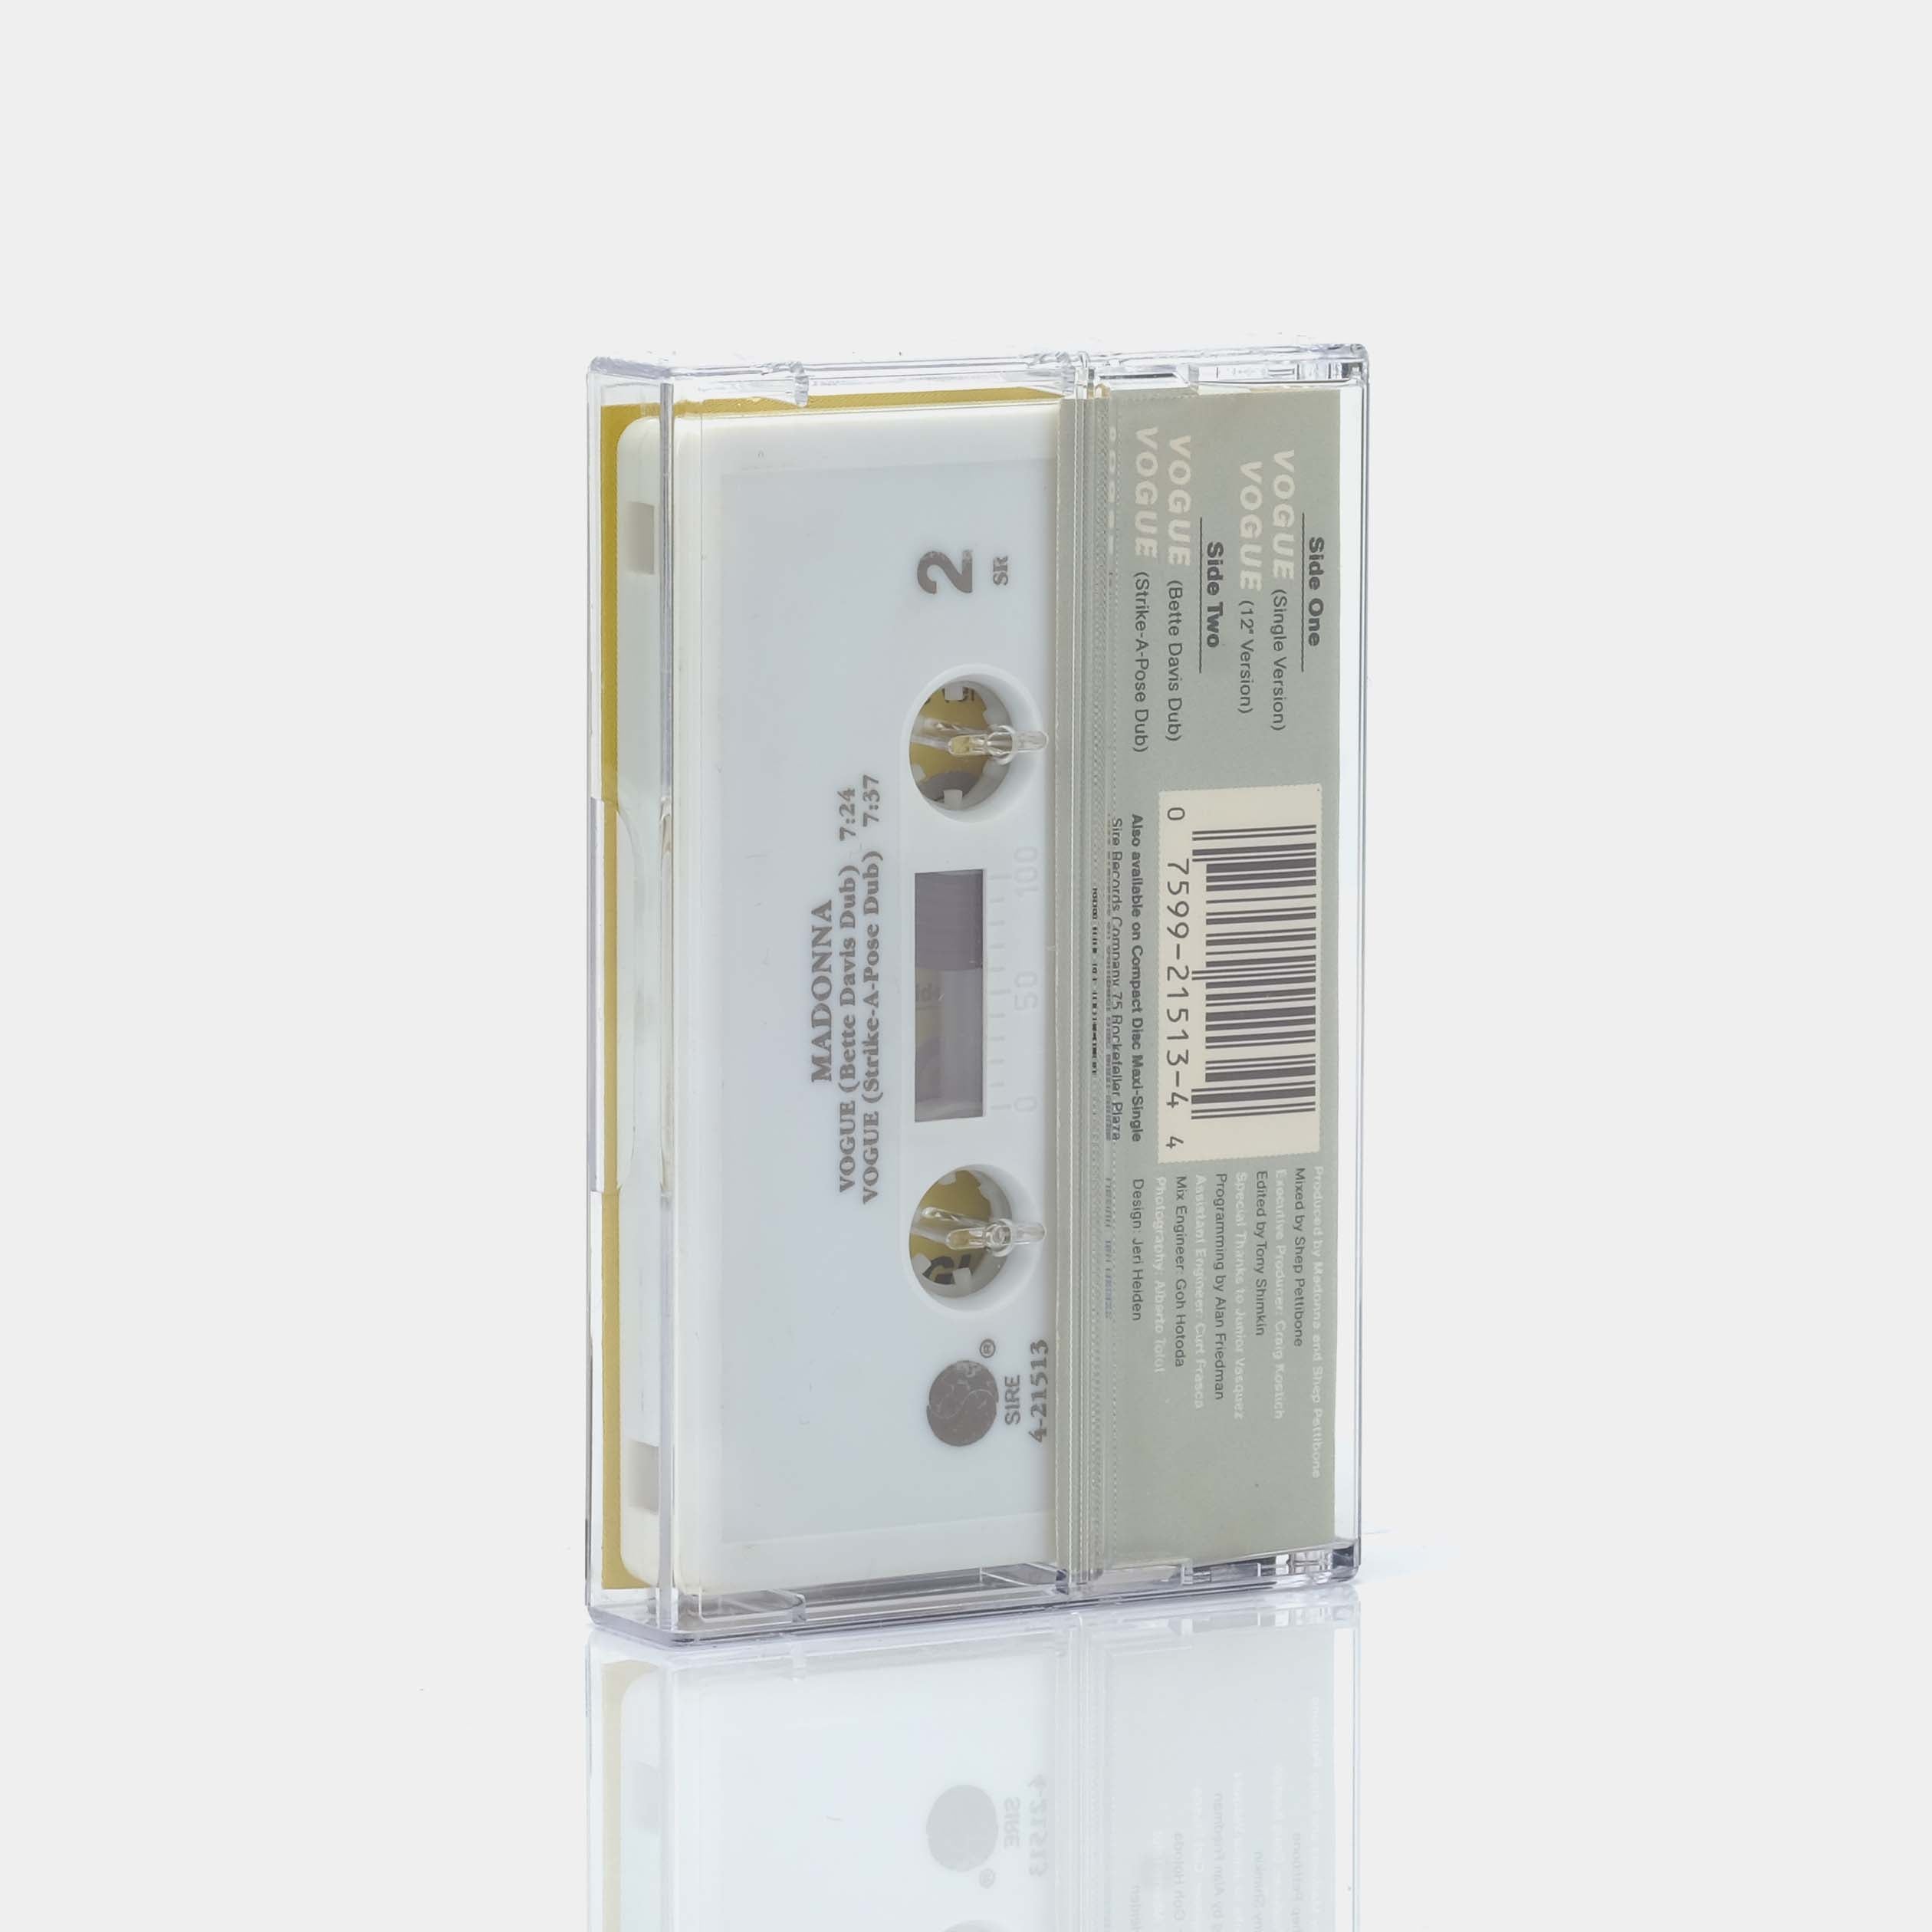 Madonna - Vogue Cassette Tape Single